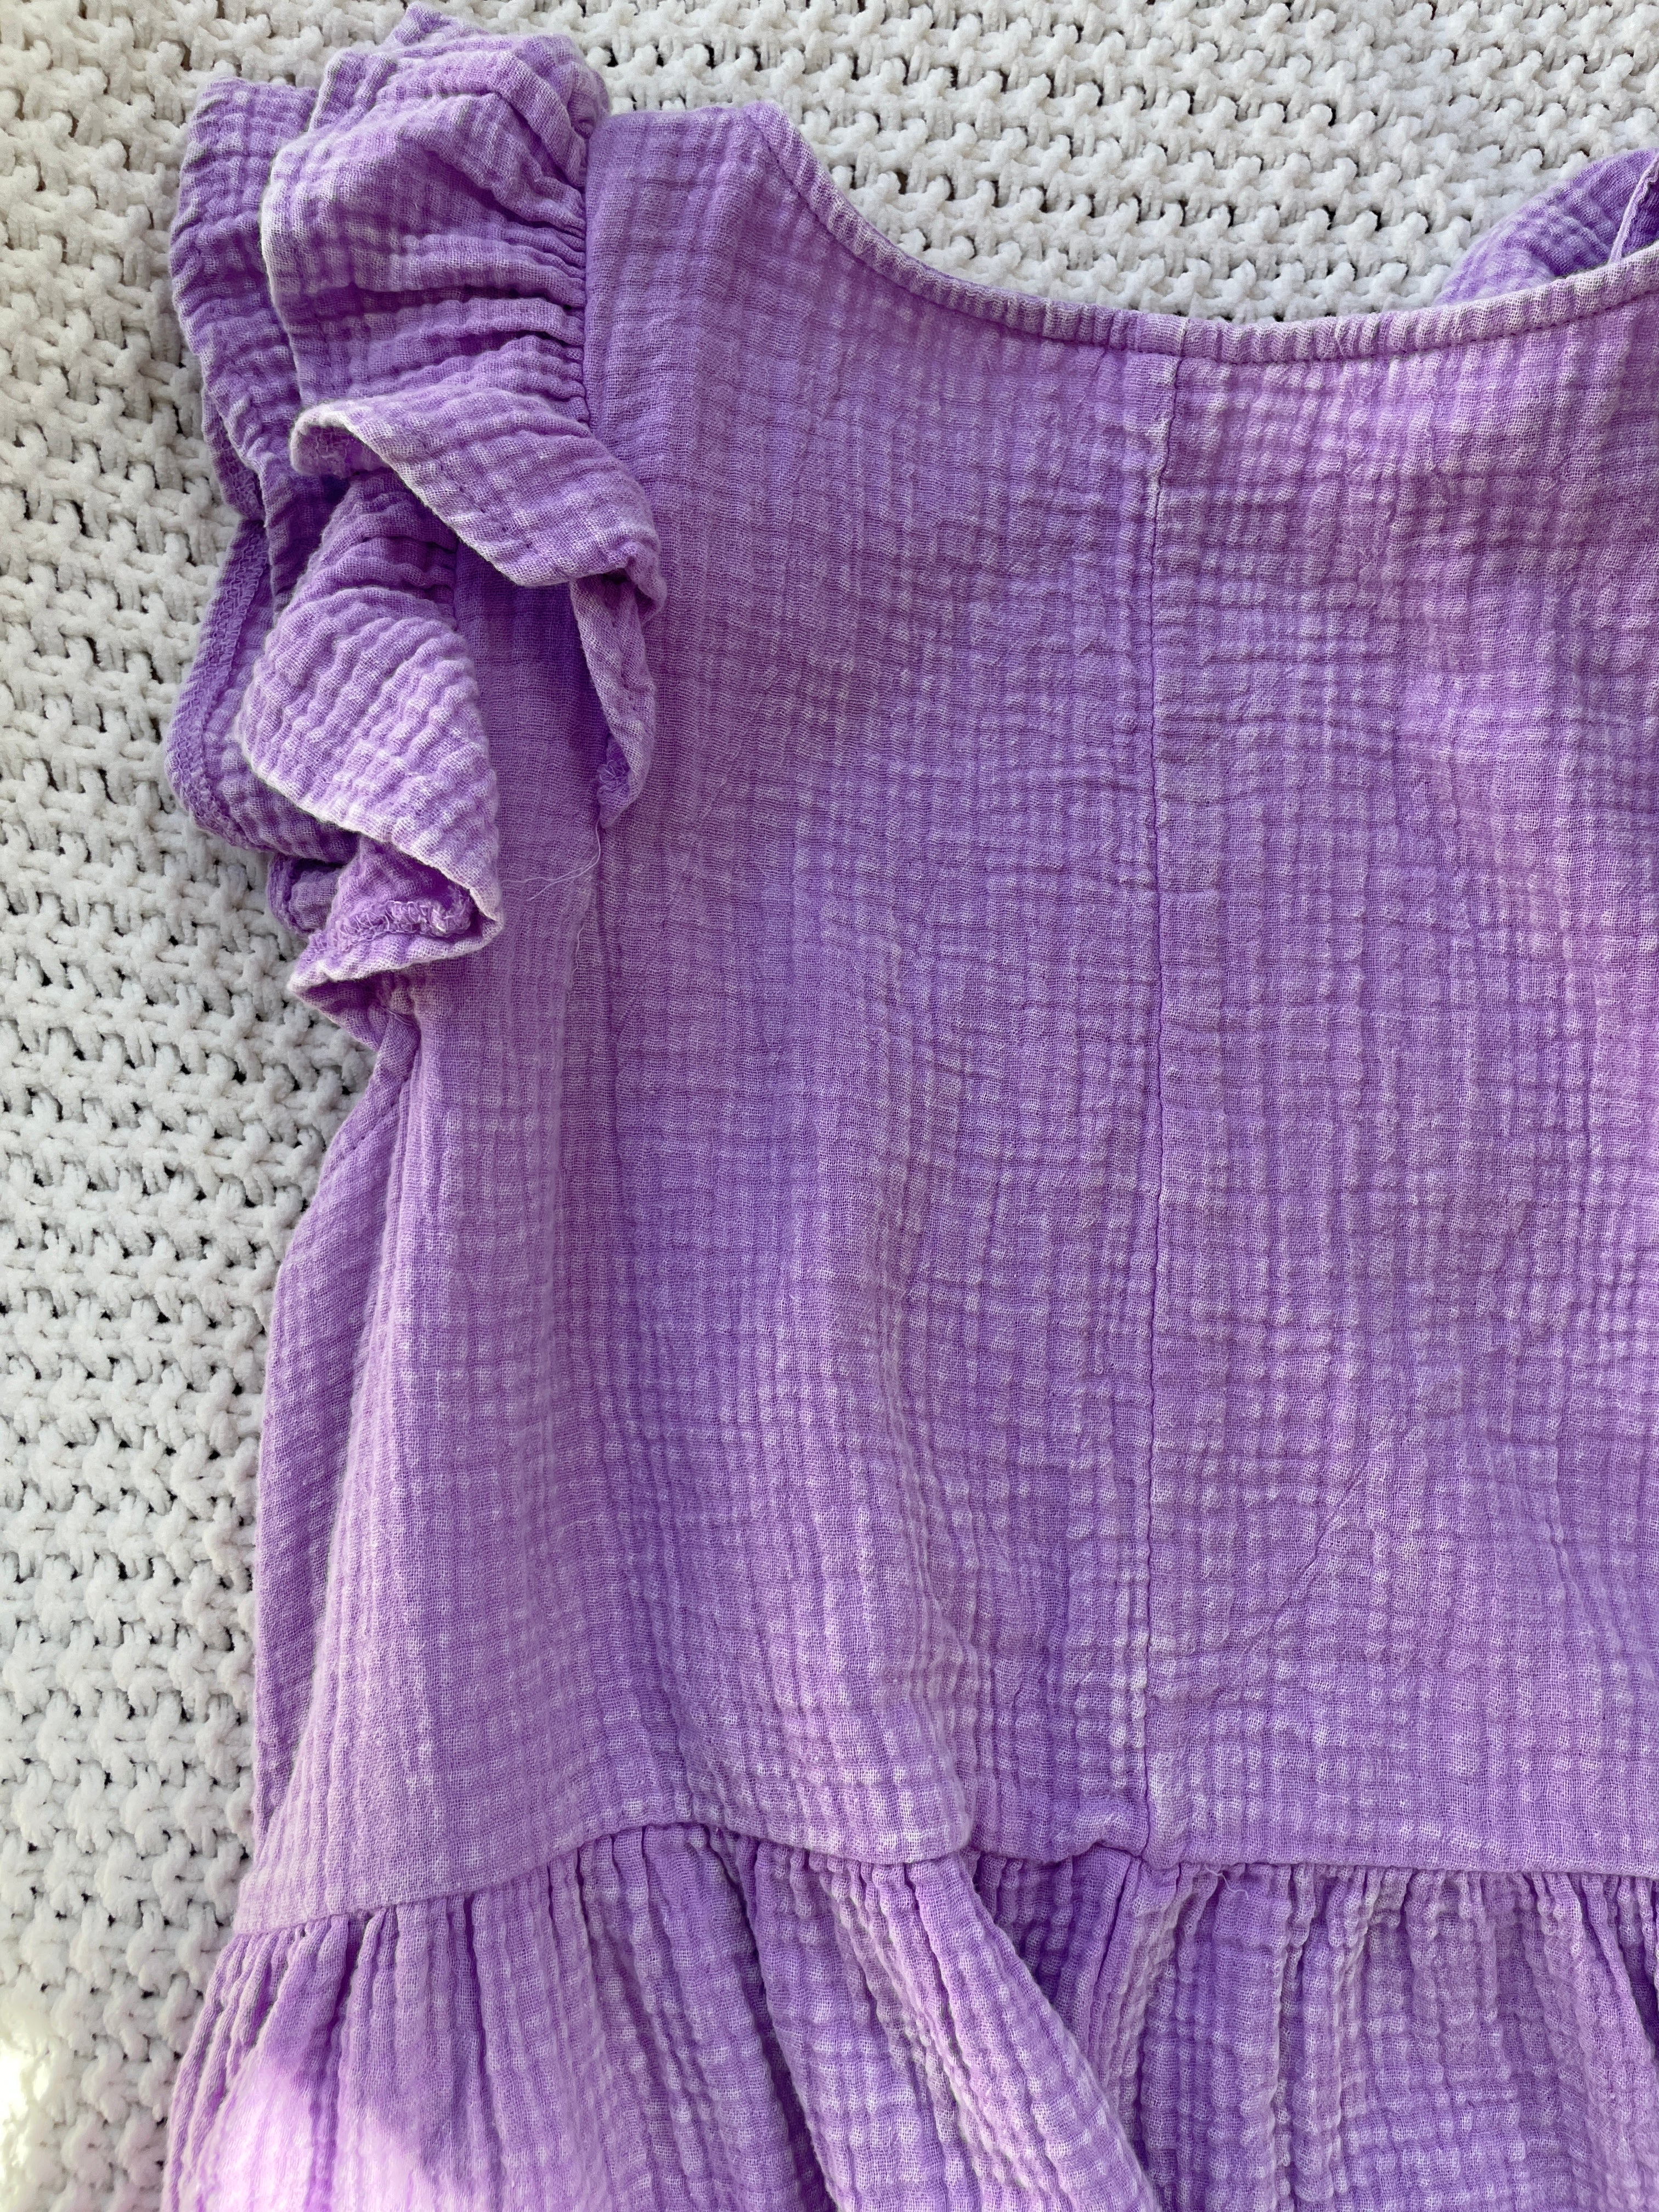 Pretty Ruffle Sleeves Top (Lavender)